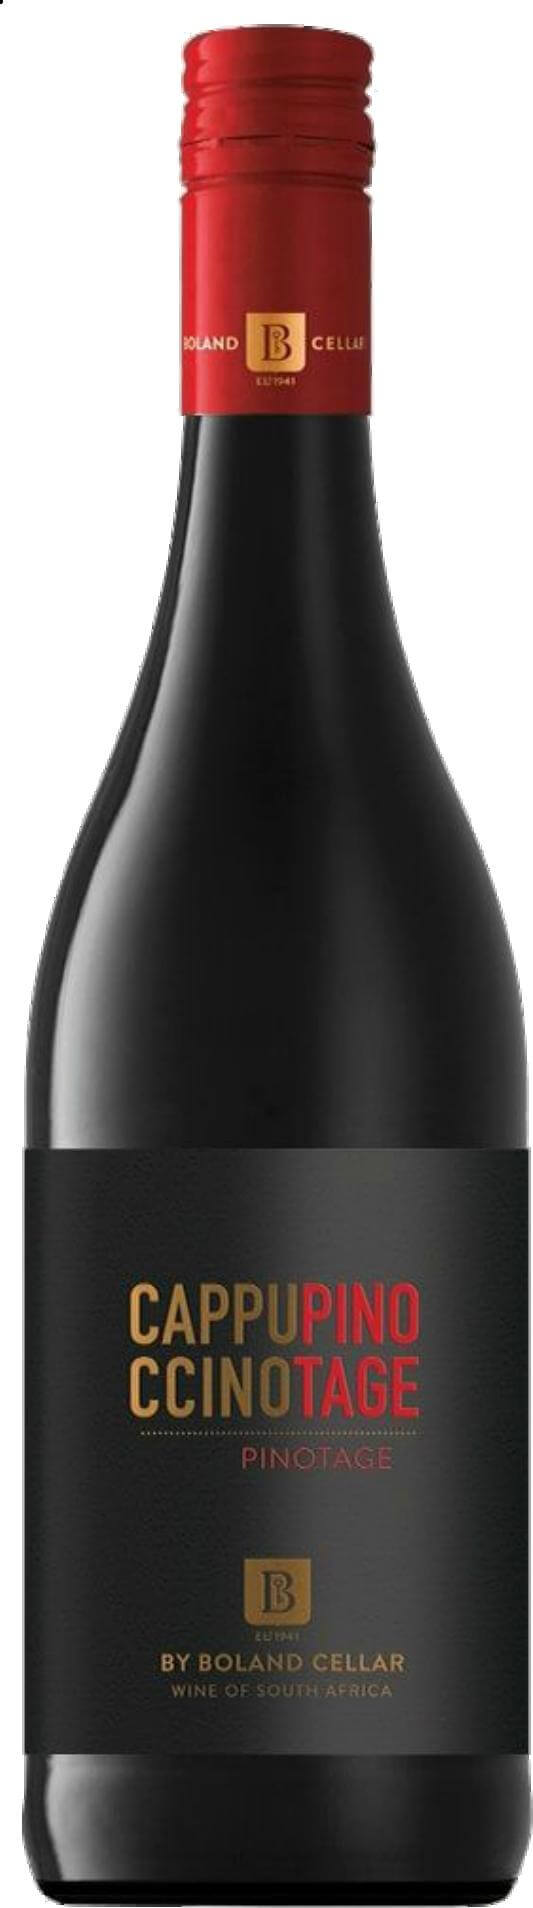 Boland Cellar Cappupinoccinotage Premium | Coastal Curry (Rotwein, Region) oHG Südafrika, Wines